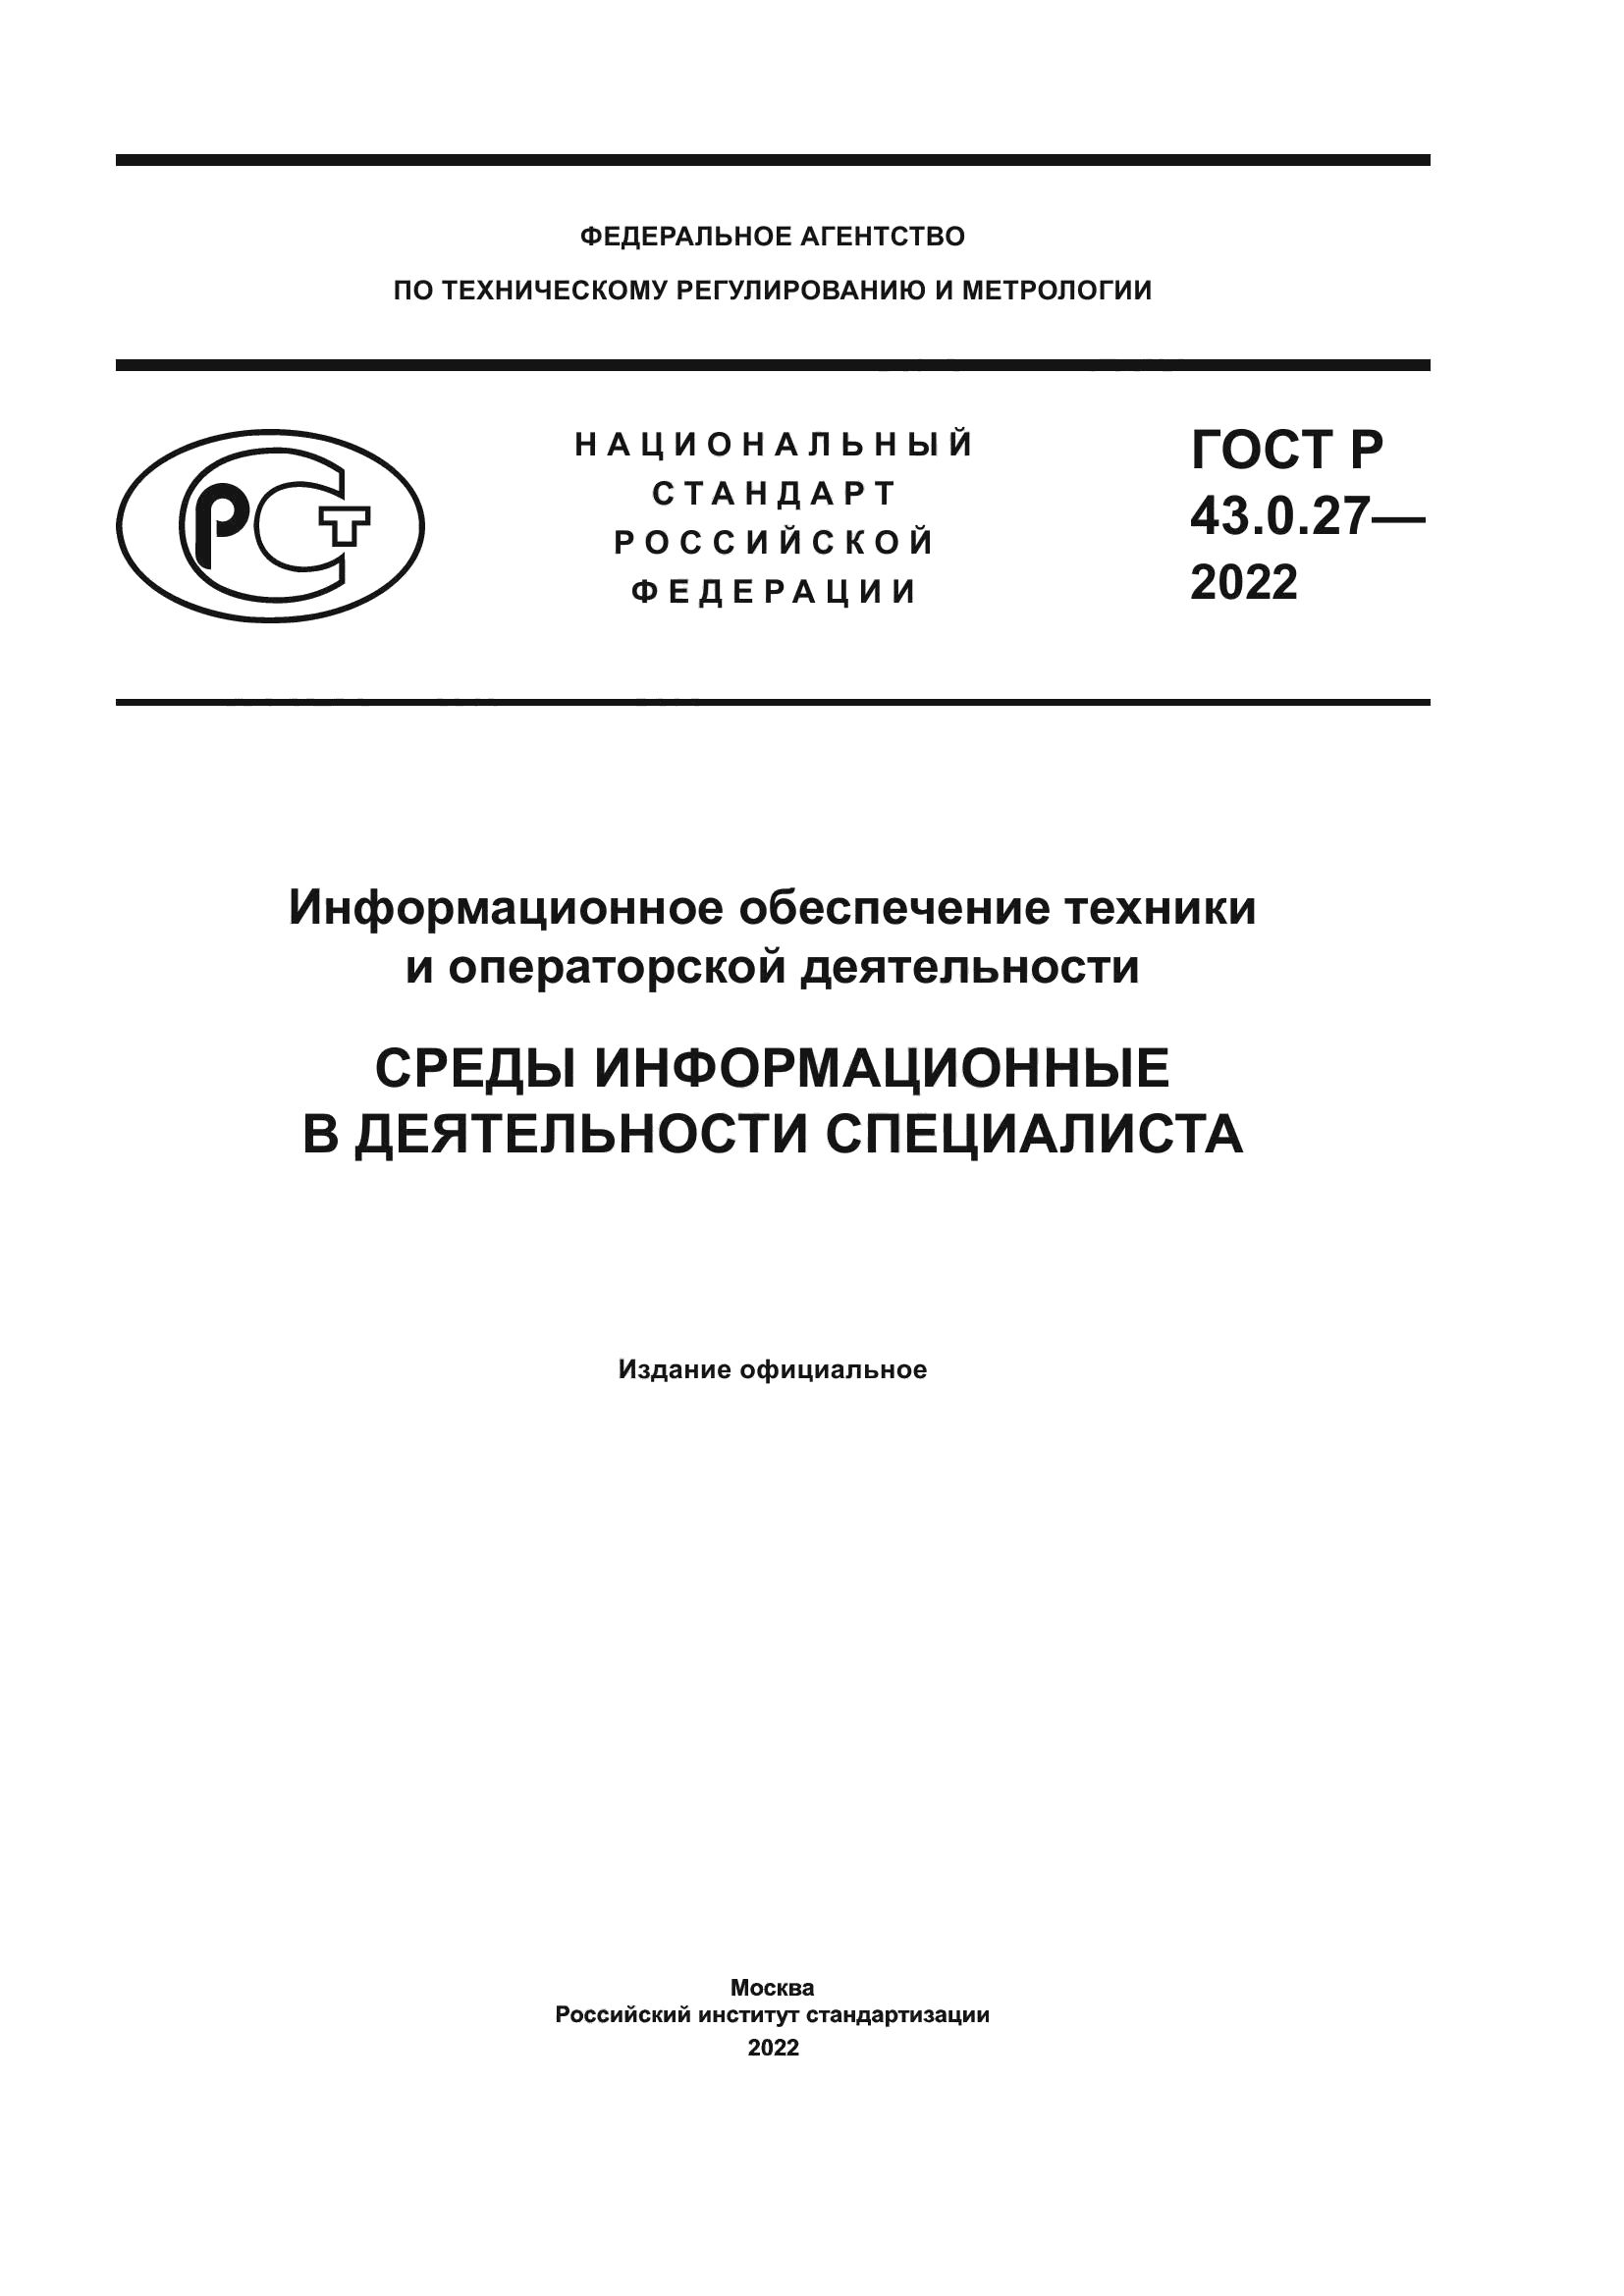 ГОСТ Р 43.0.27-2022